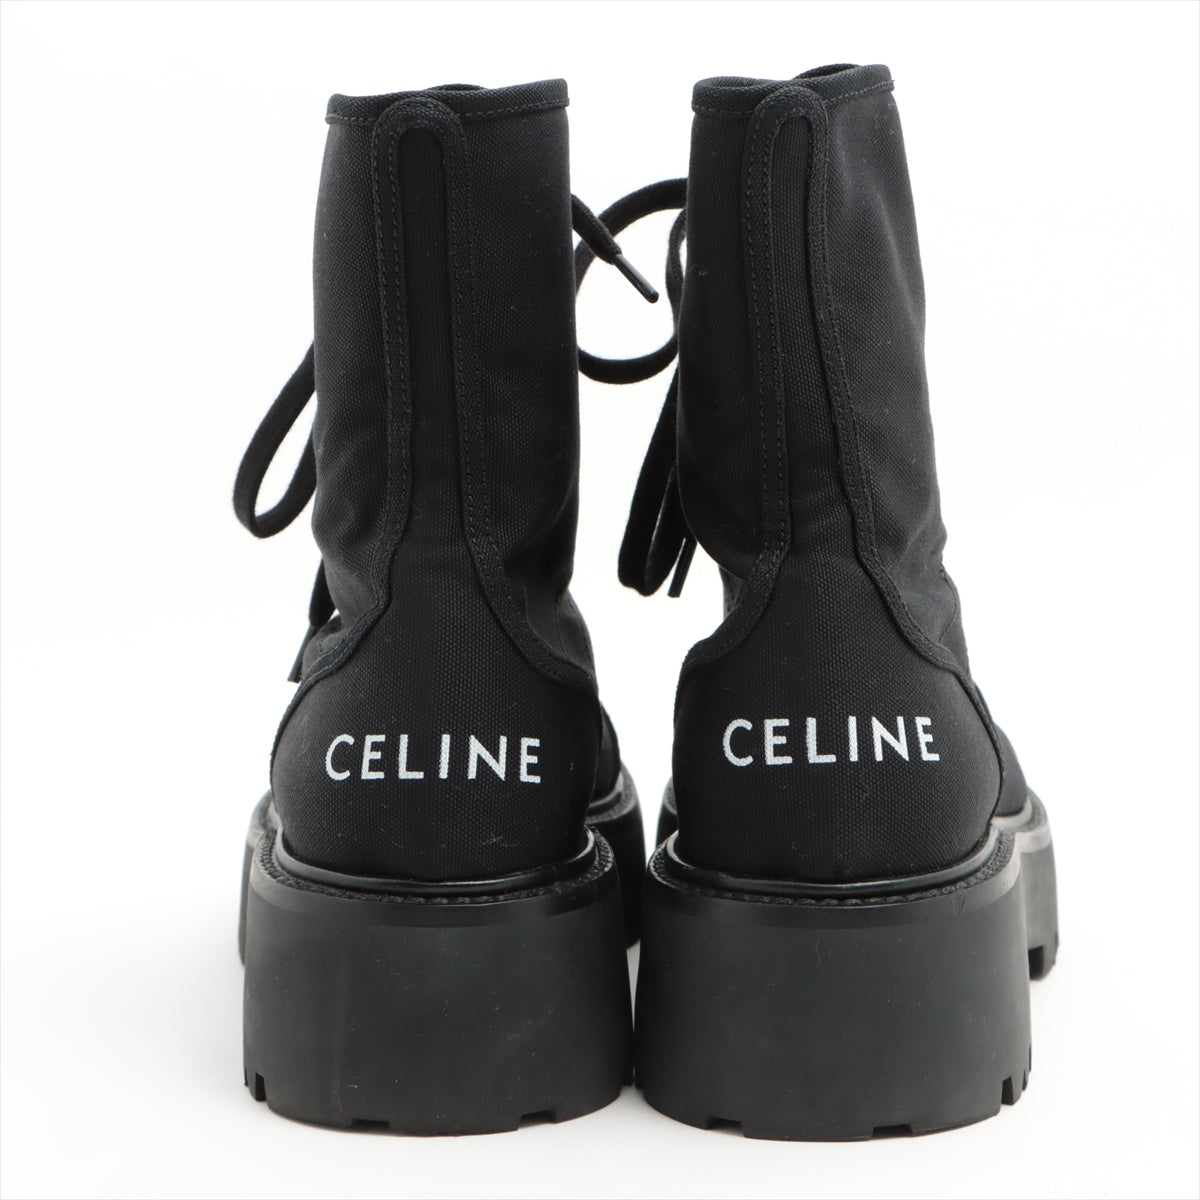 CELINE Canvas & leather Boots 40 Men's Black bulky lace-up boots